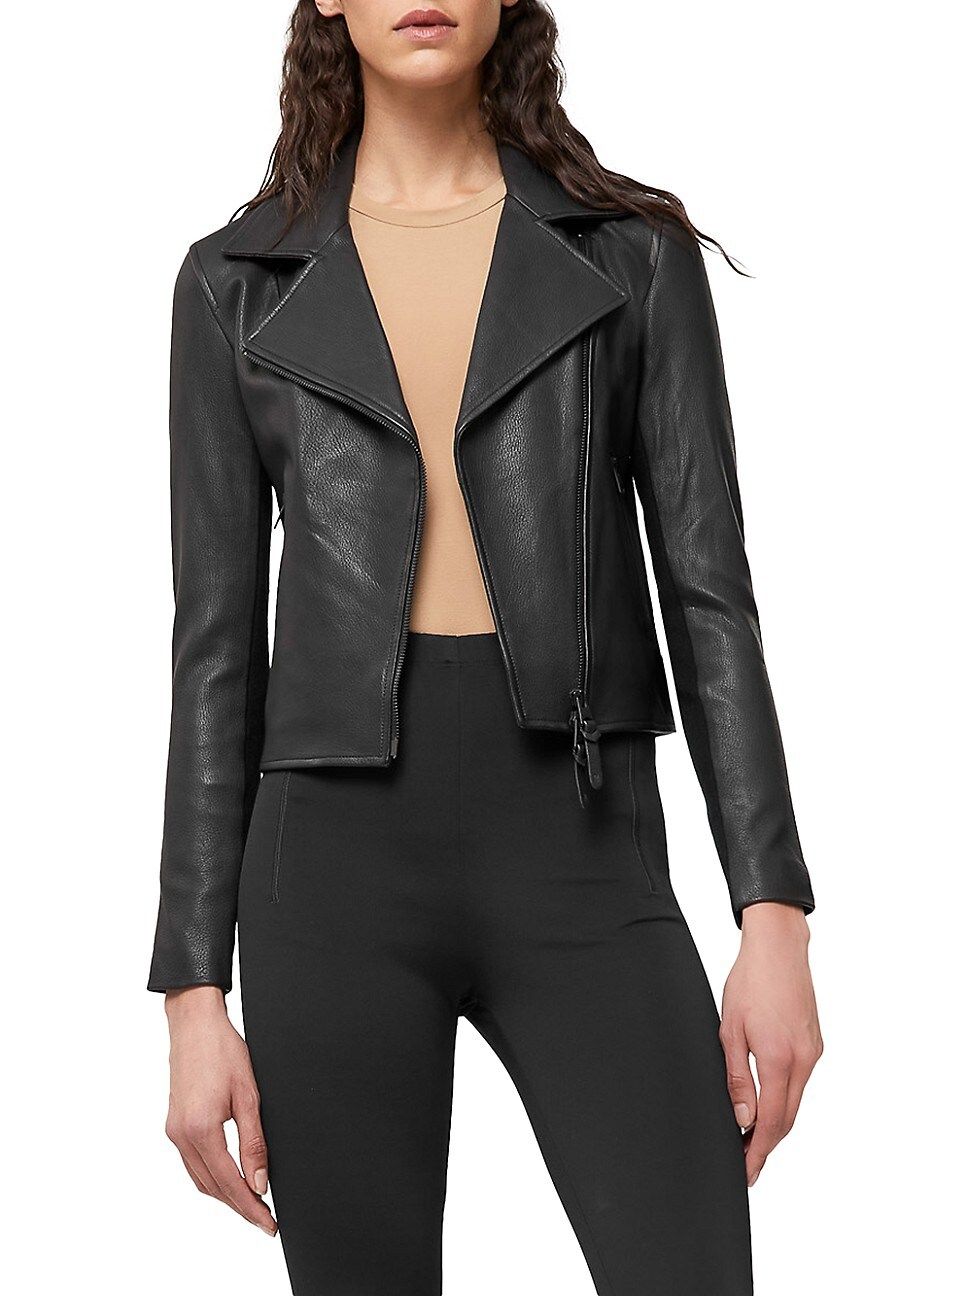 Mackage Women's Gem Asymmetrical Leather Jacket - Black - Size Medium | Saks Fifth Avenue